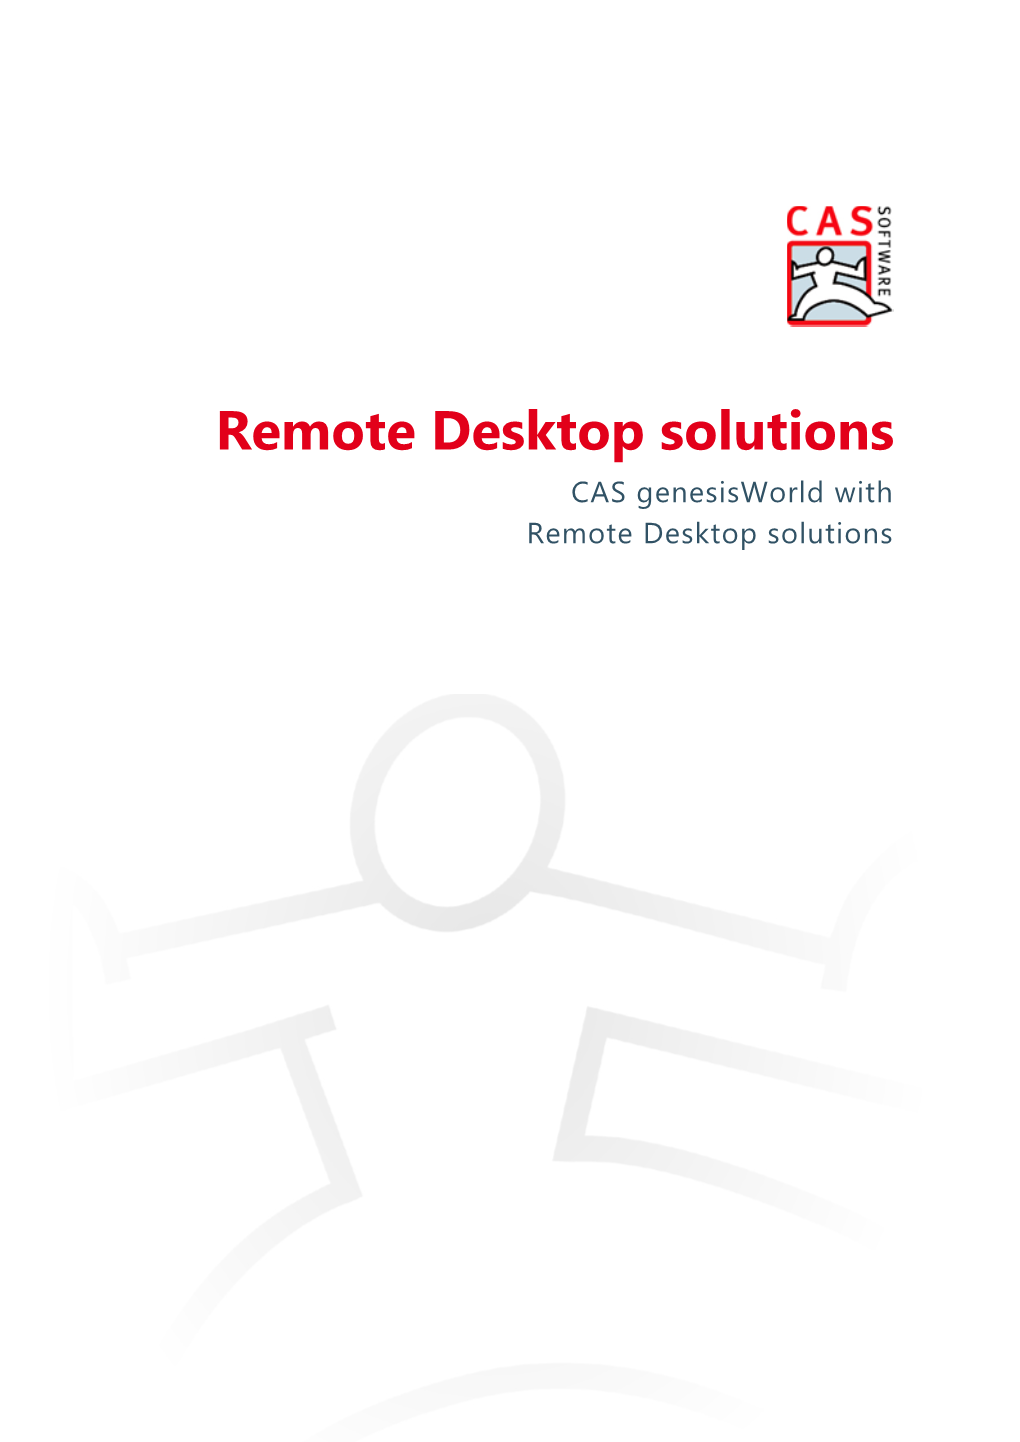 Remote Desktop Solutions CAS Genesisworld with Remote Desktop Solutions